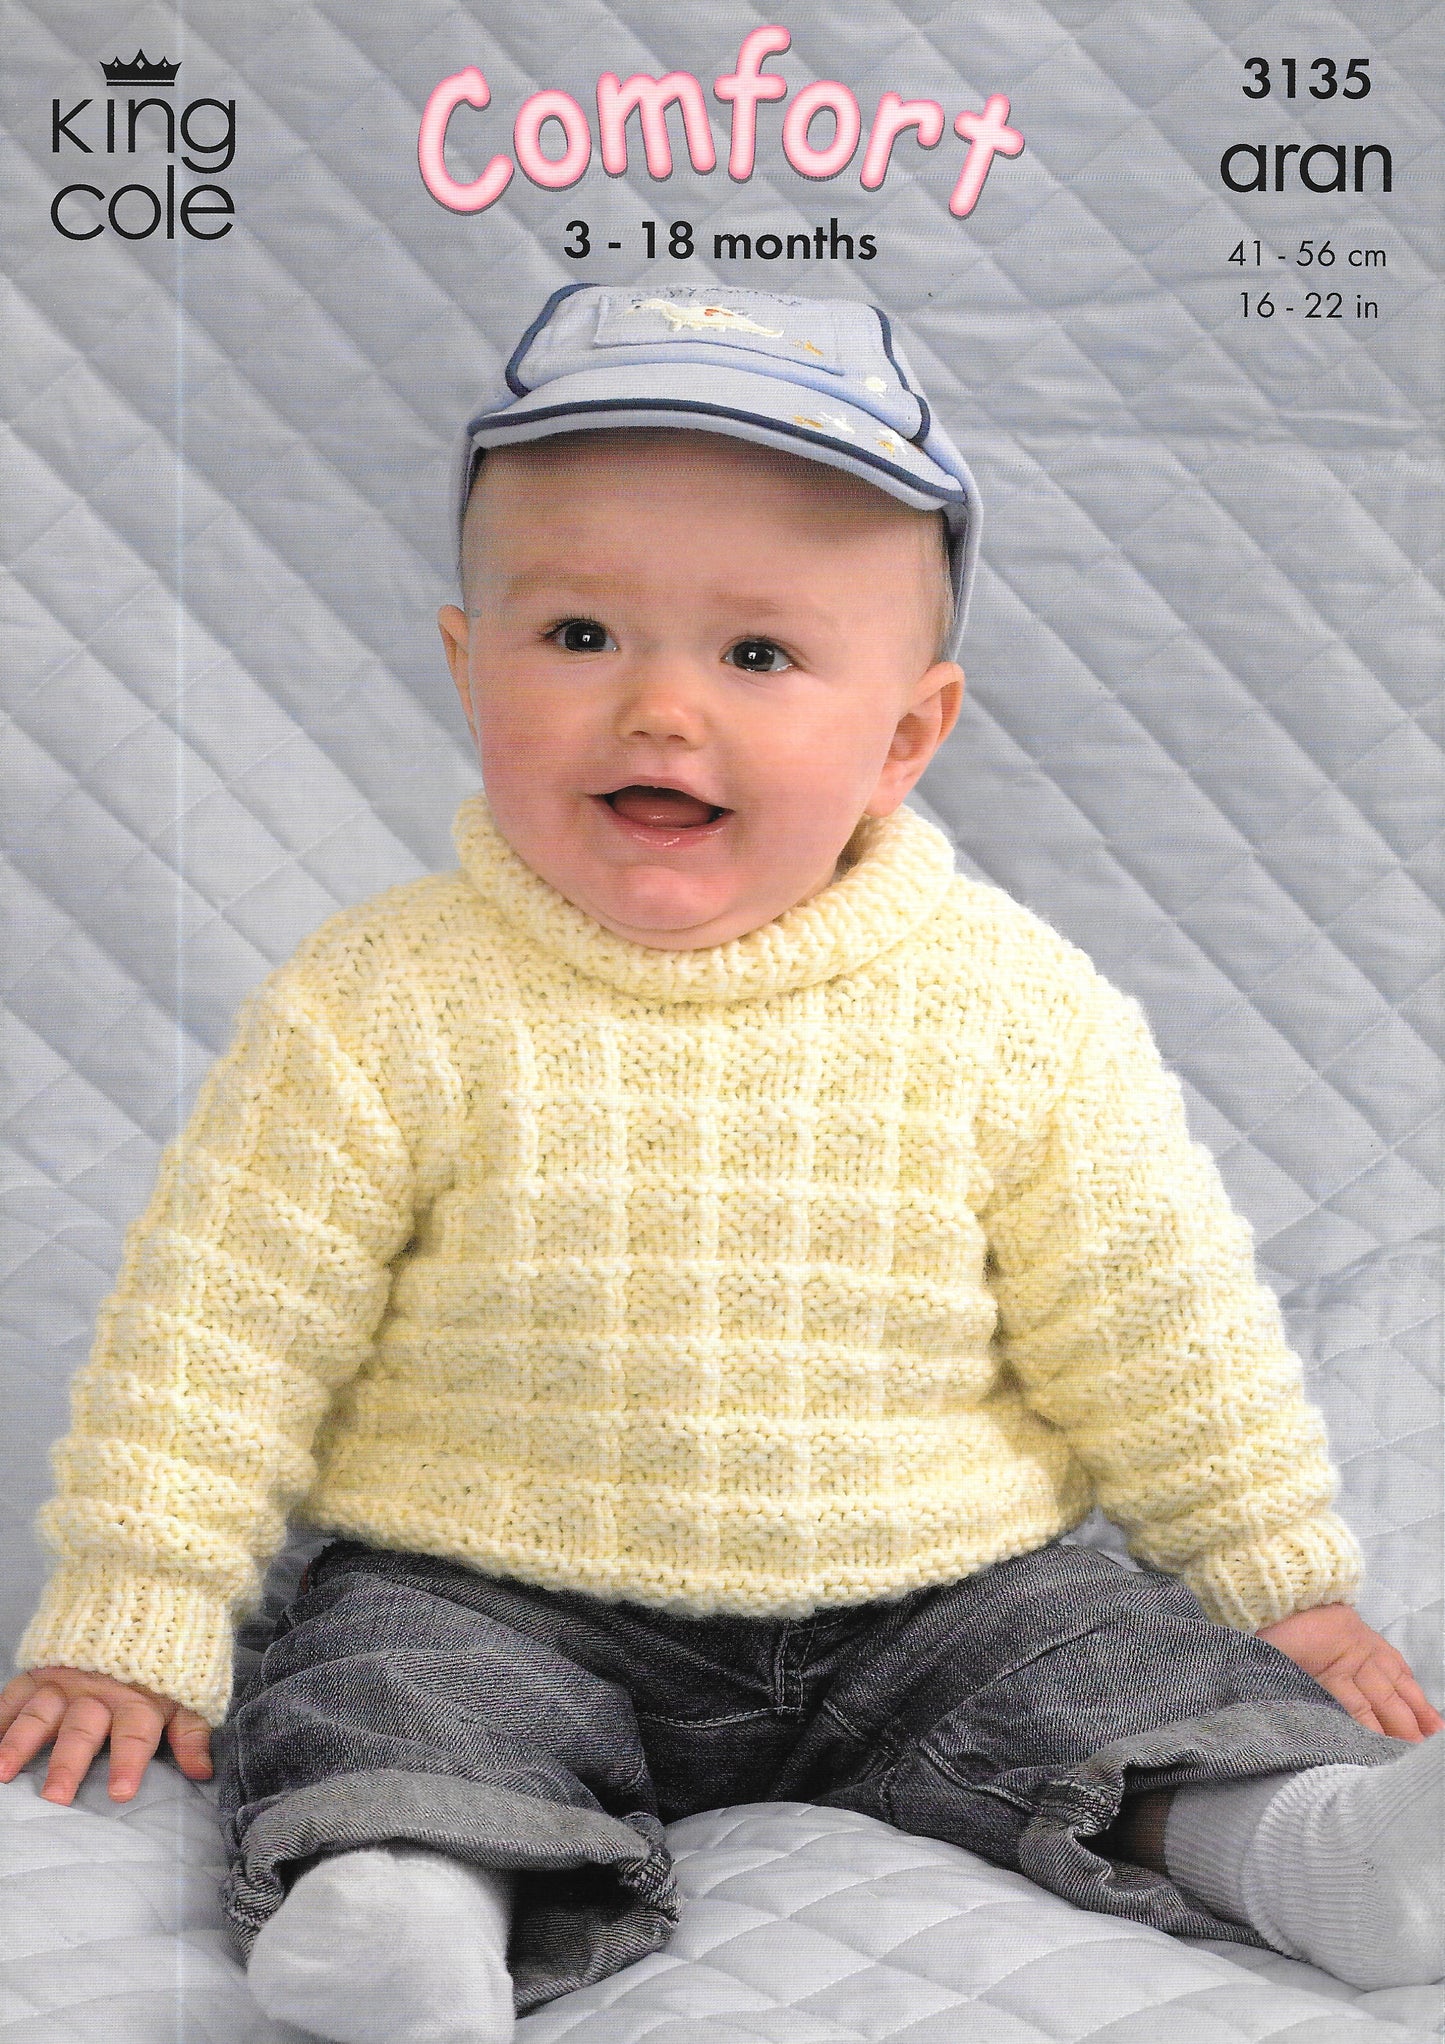 3135 King Cole knitting pattern. Child's cardigan/sweater. Aran